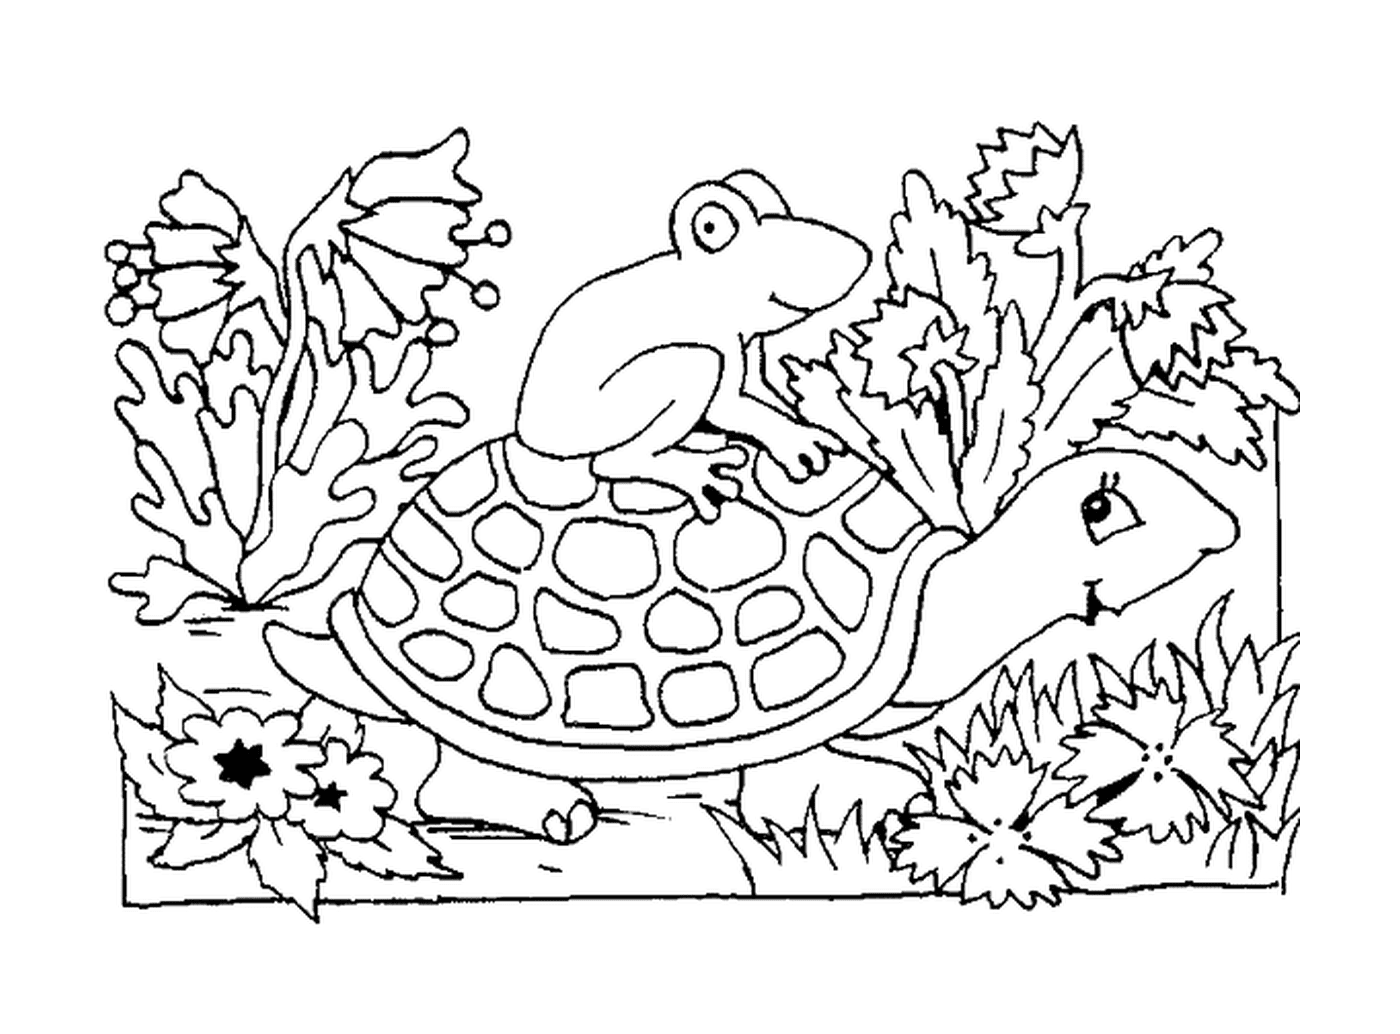  Una rana sentada sobre una caparazón de tortuga 